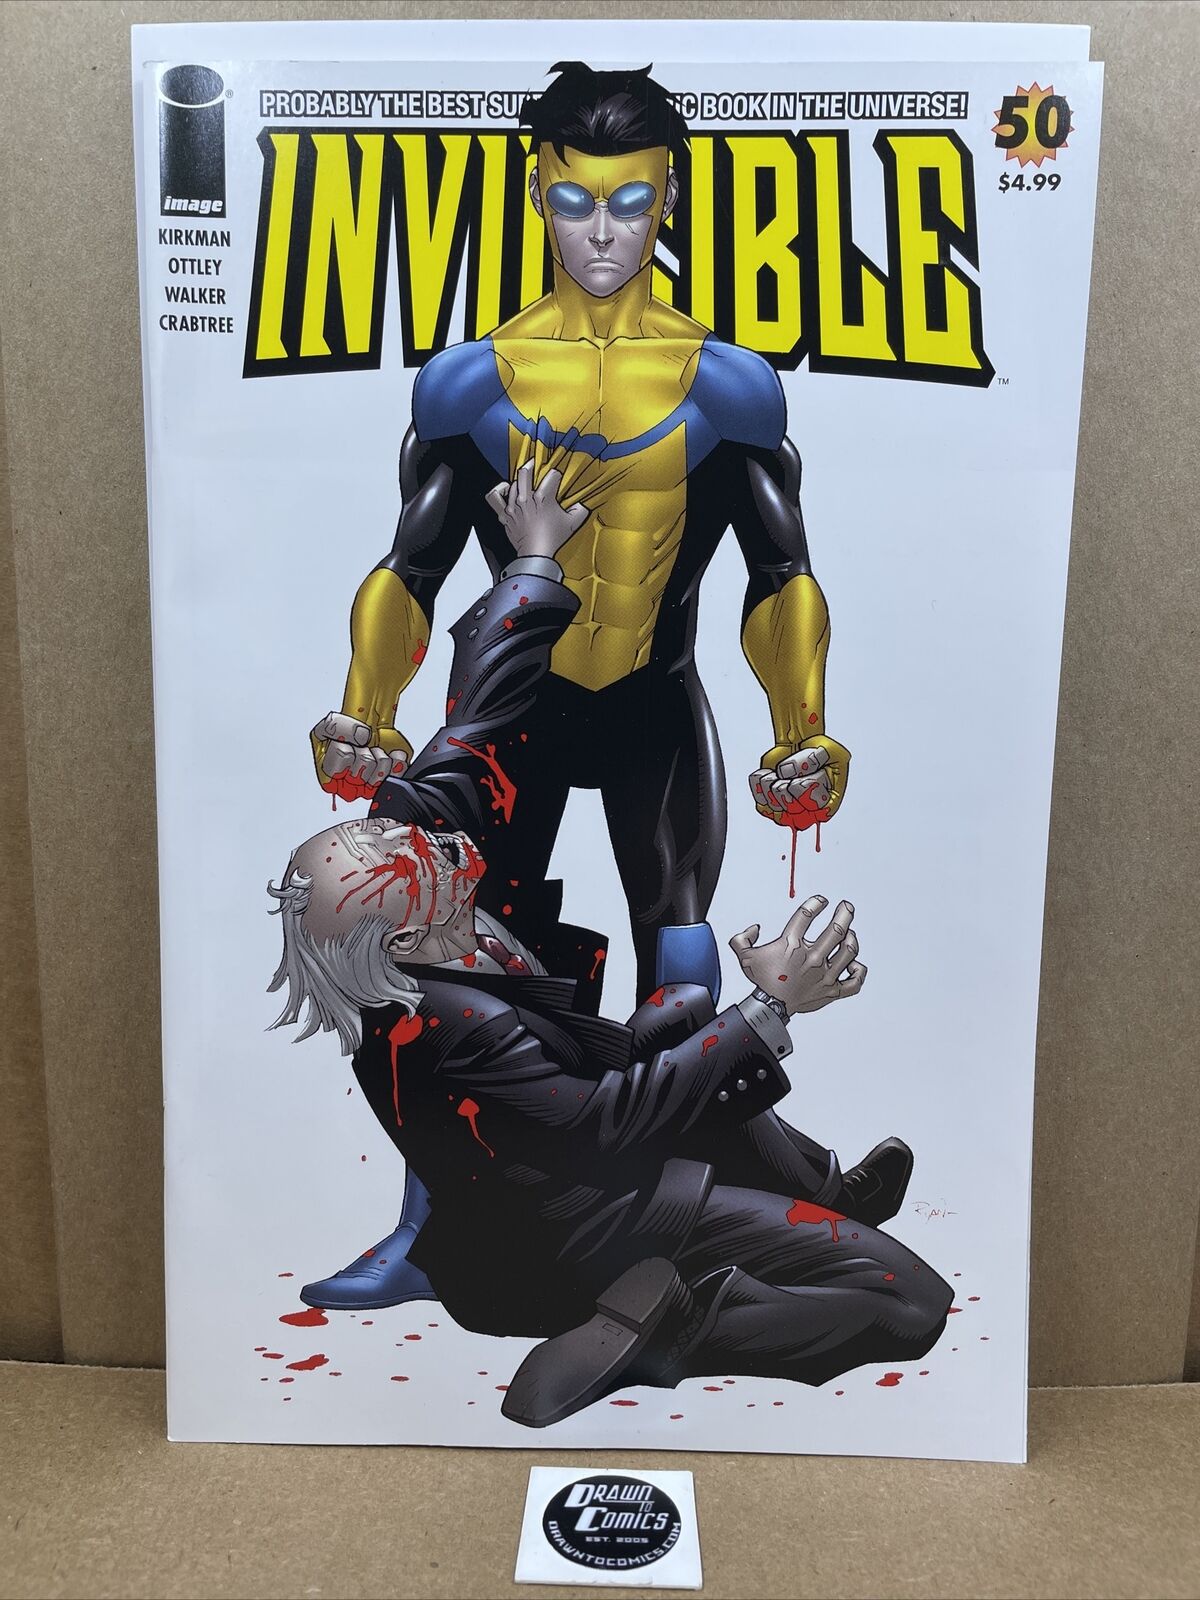 Invincible #50 1st Print Image Comics Kirkman Ottley Amazon TV Series Show NM